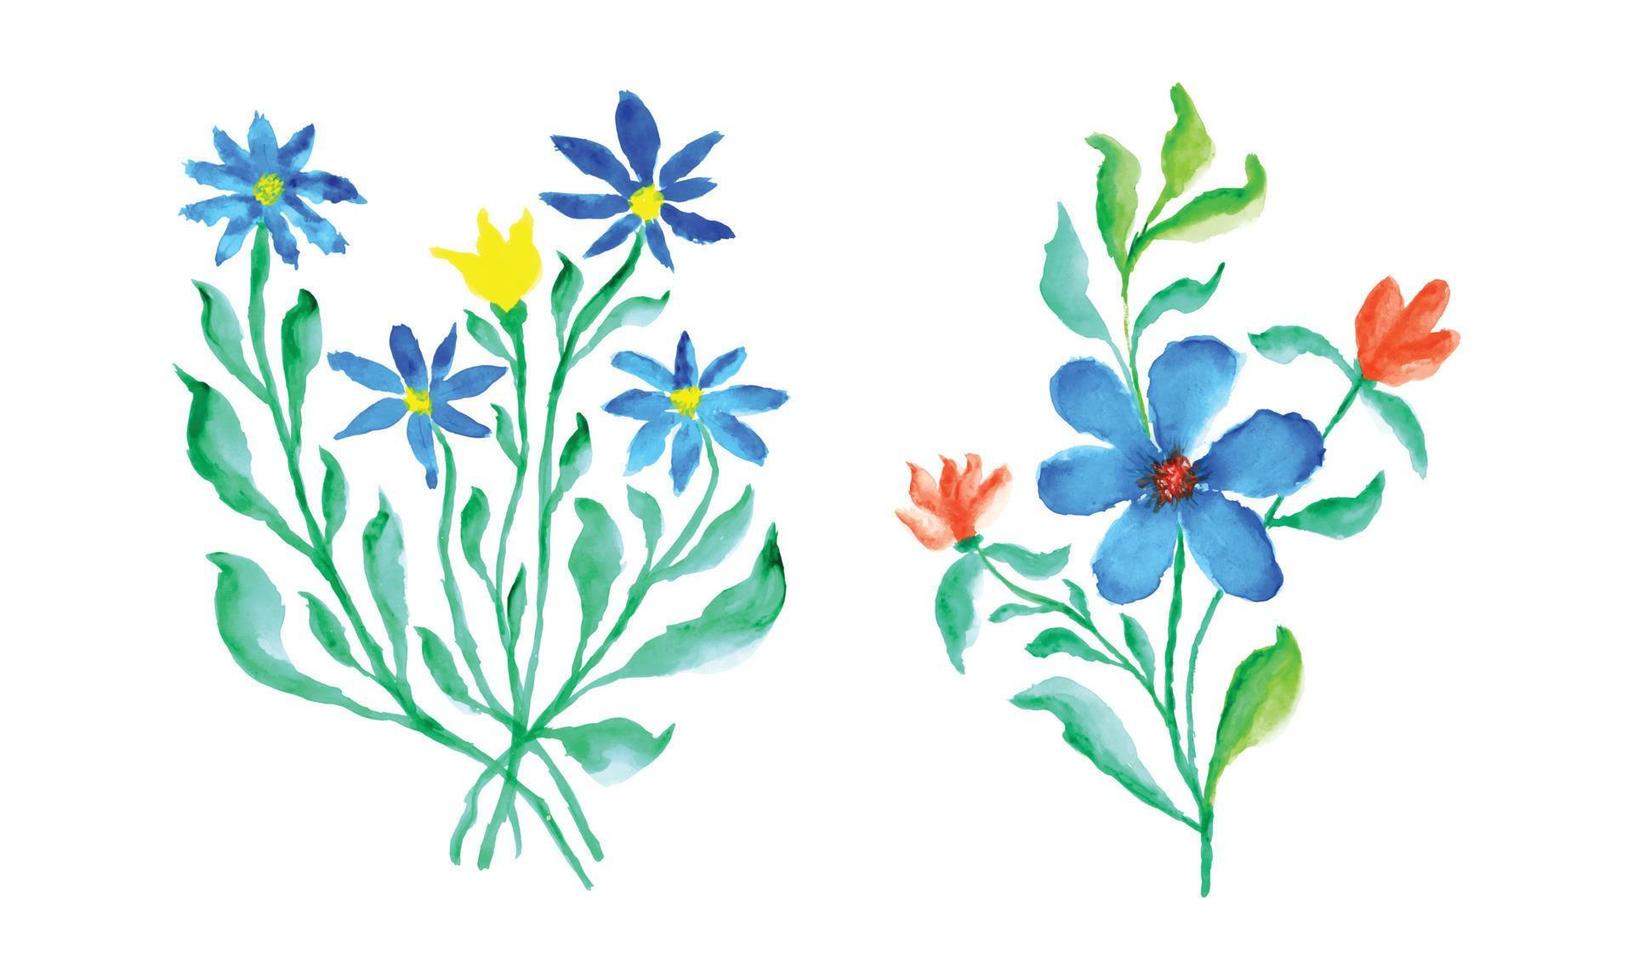 dos azul flores en un blanco antecedentes. acuarela pintura de azul flores con verde hojas. vistoso acuarela flor diseño vector